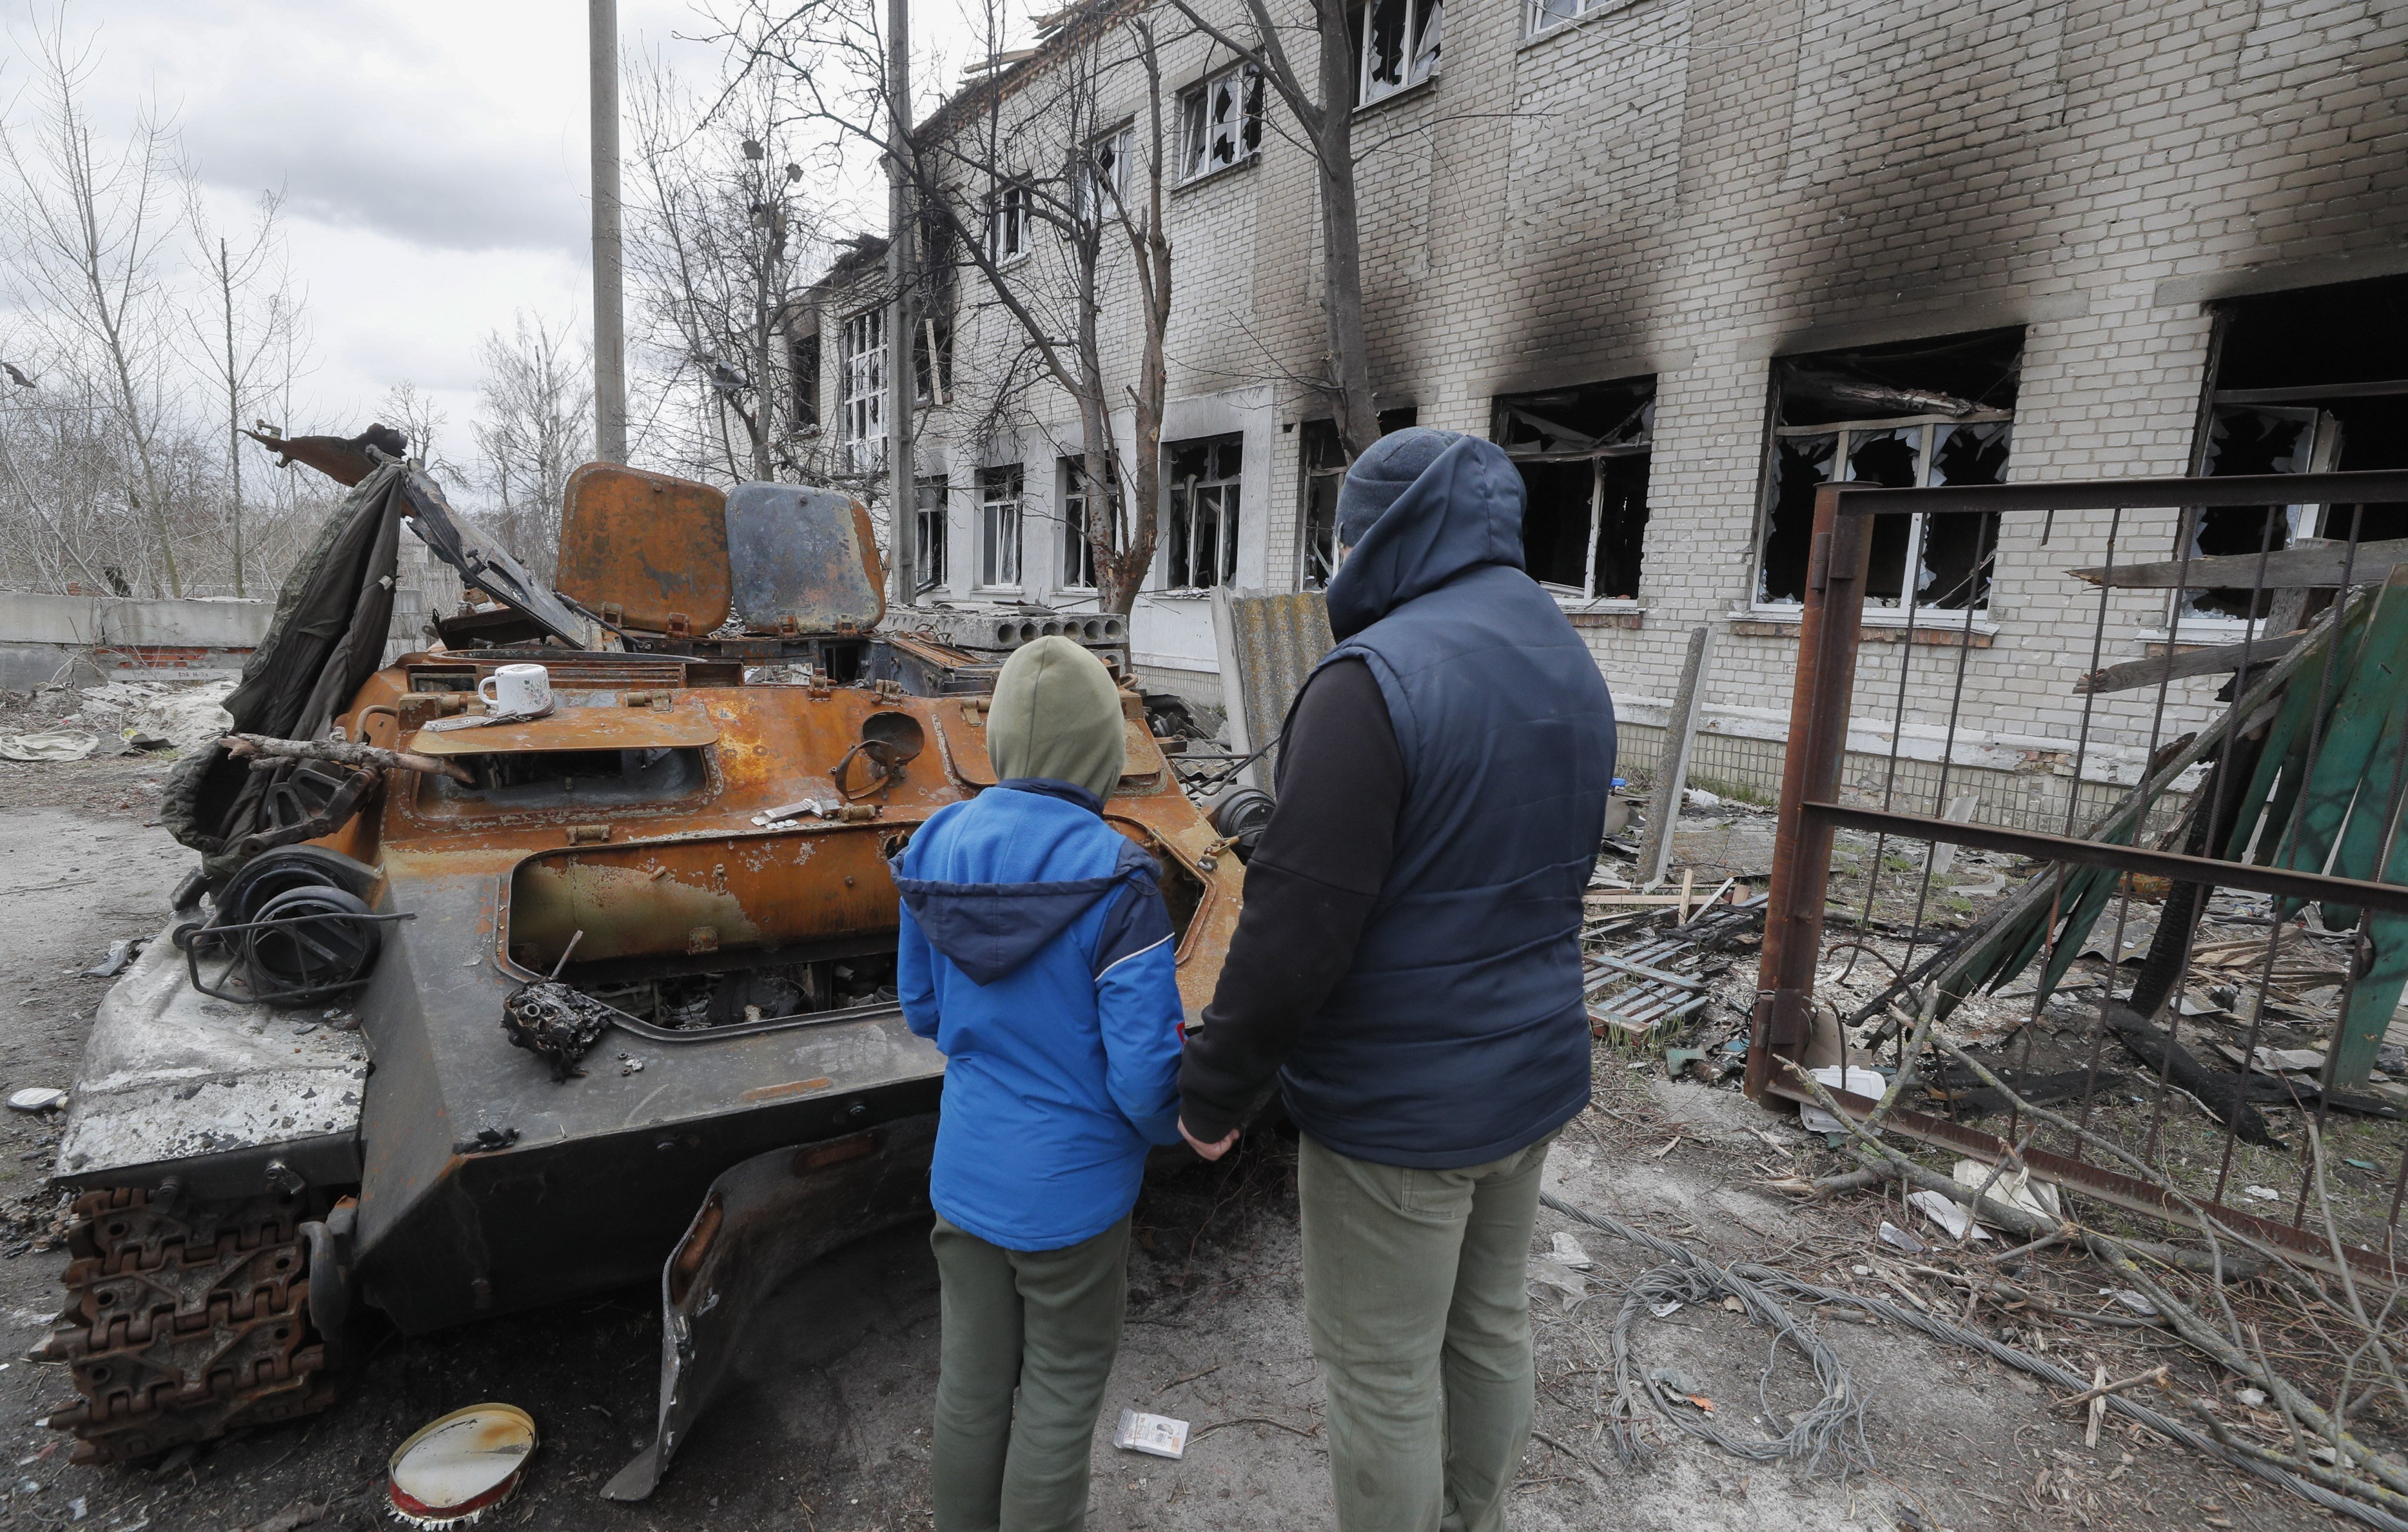  A man with his son examine a damaged school near Brovary, in Kyiv.
Photo: EPA-EFE